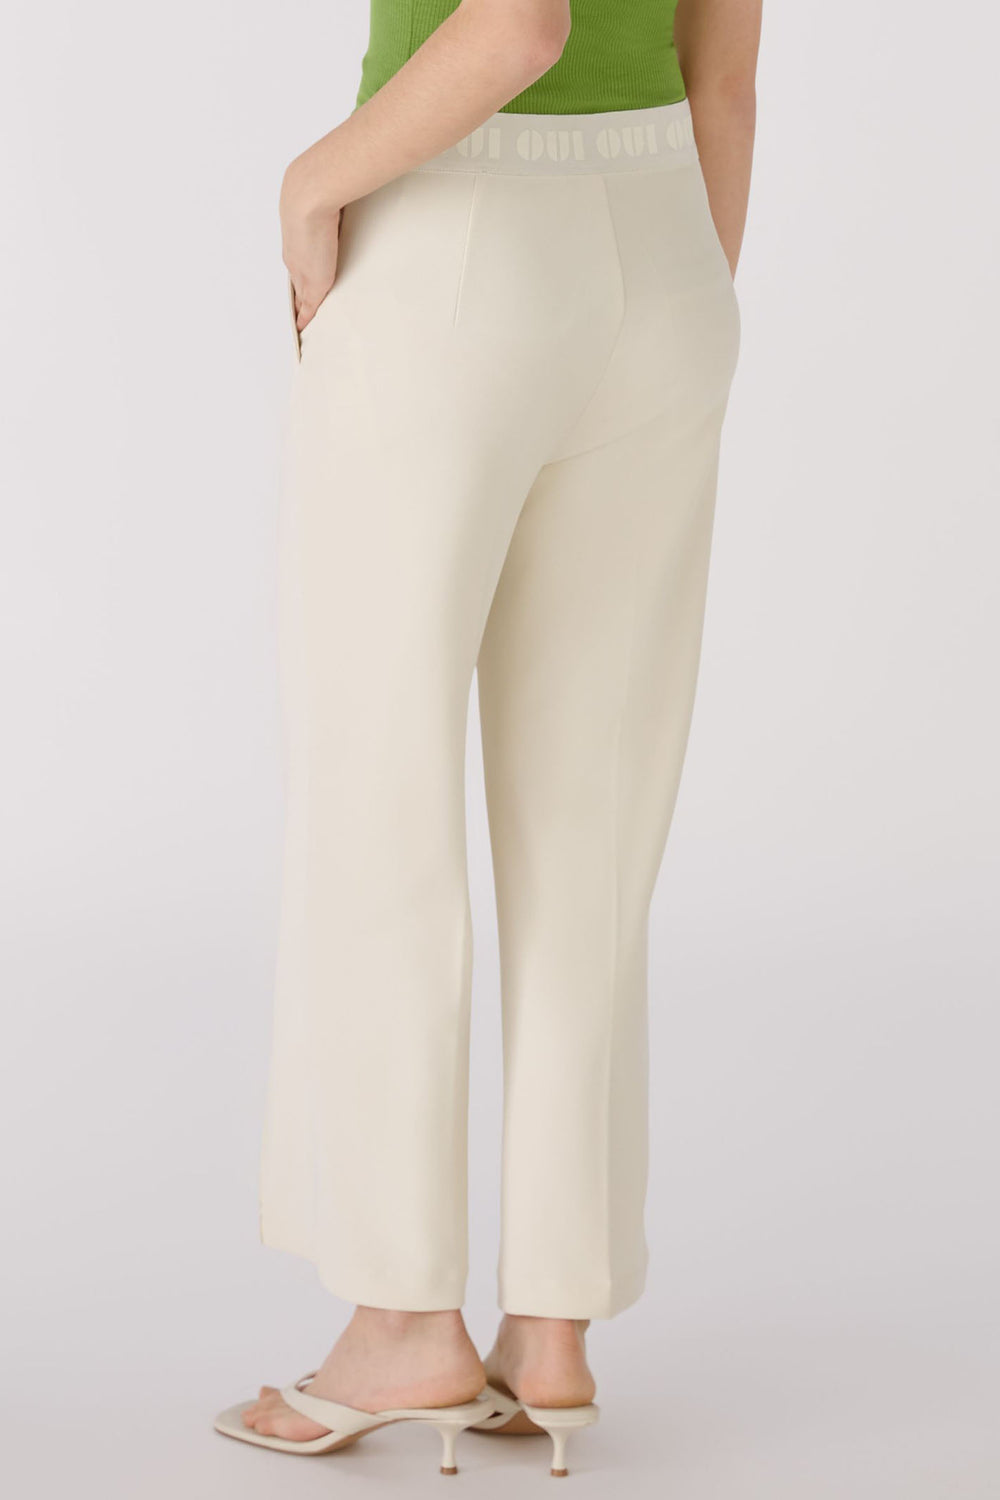 Oui 86917 Off White Cream Pull-On Trousers - Olivia Grace Fashion